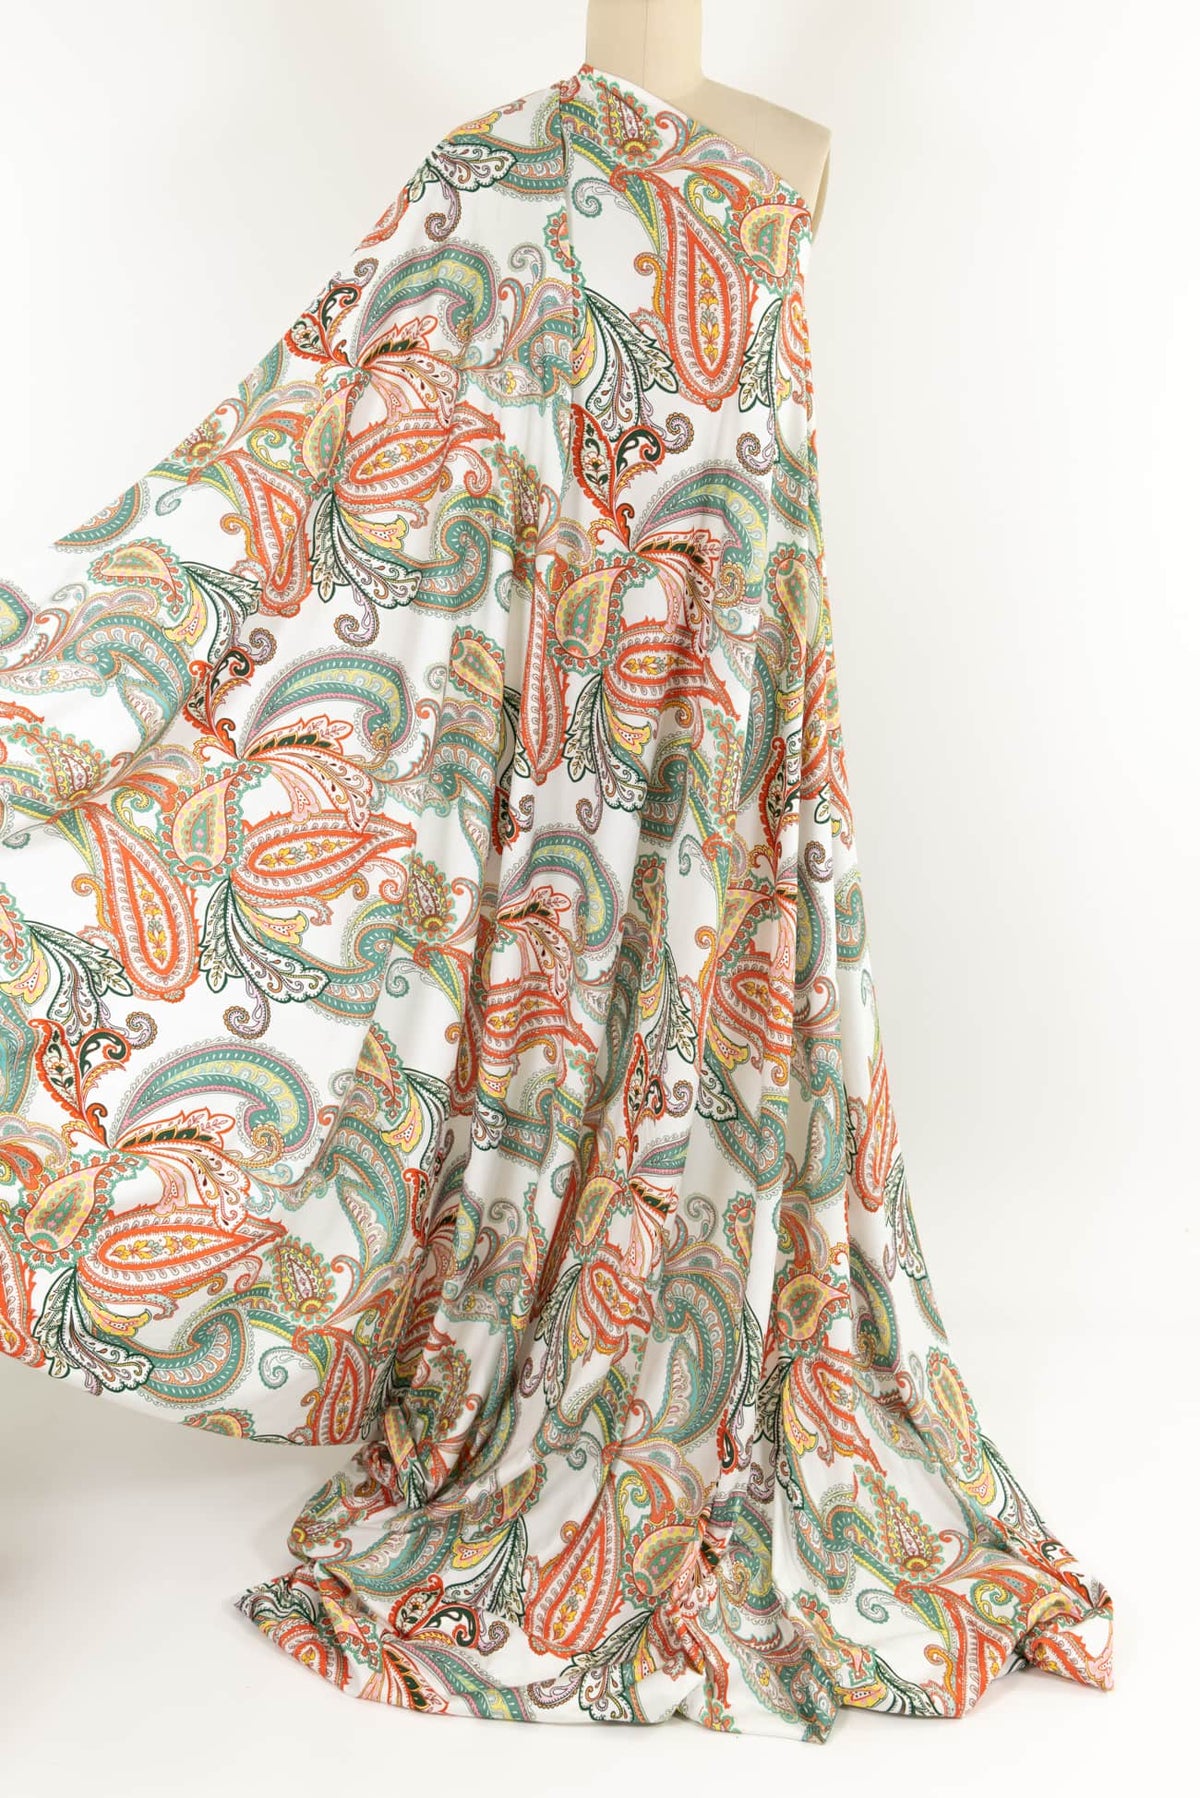 Linden Paisley Cotton/Lycra French Knit - Marcy Tilton Fabrics